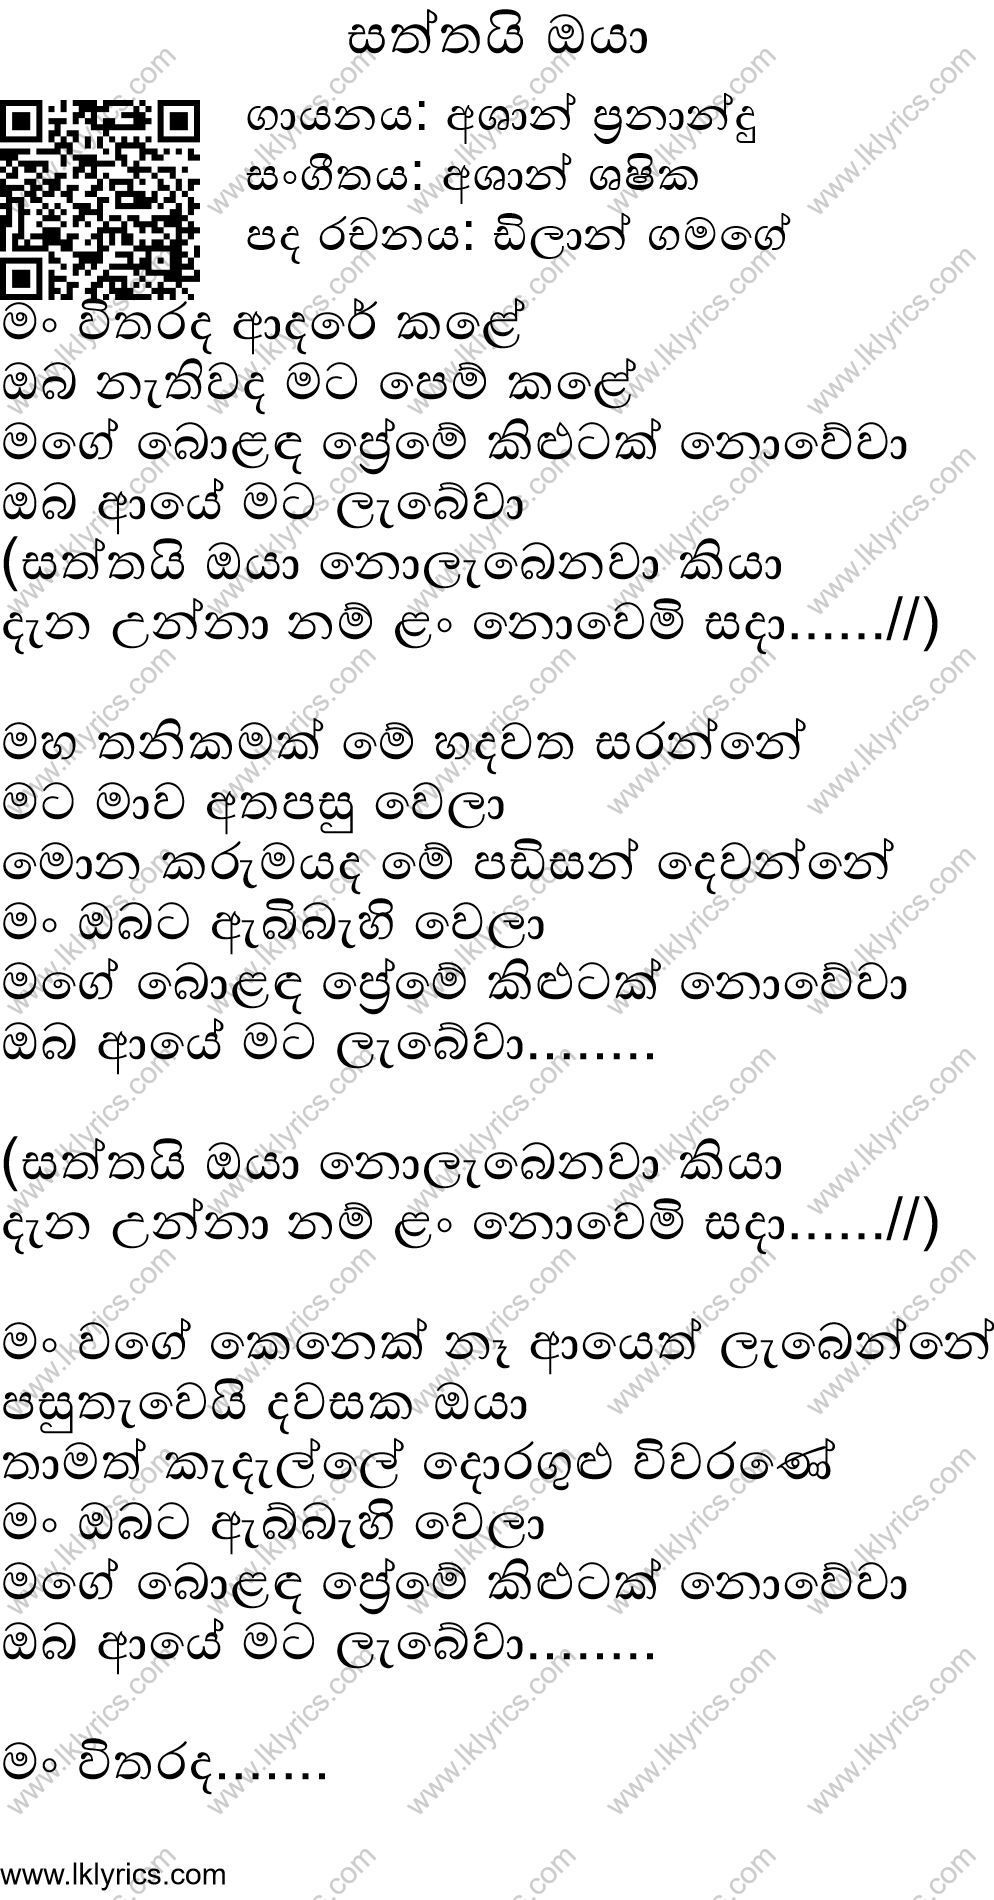 Saththai Oya Lyrics Lk Lyrics 